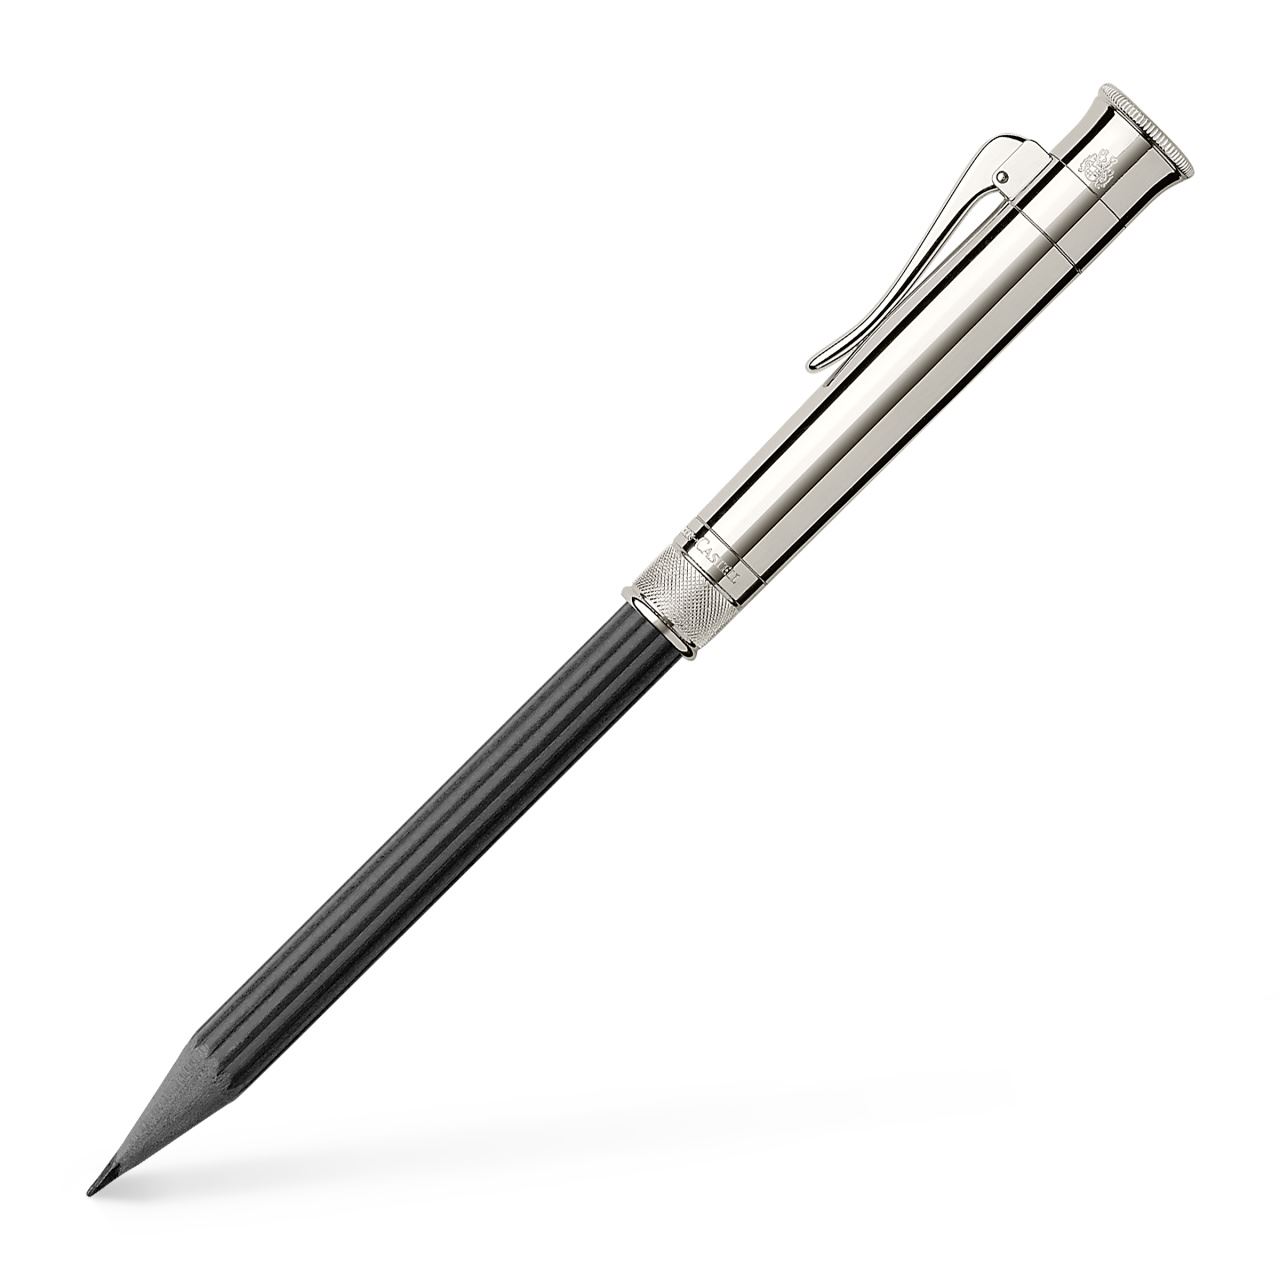 Graf-von-Faber-Castell - Desk set with platinium-plated Perfect Pencil black